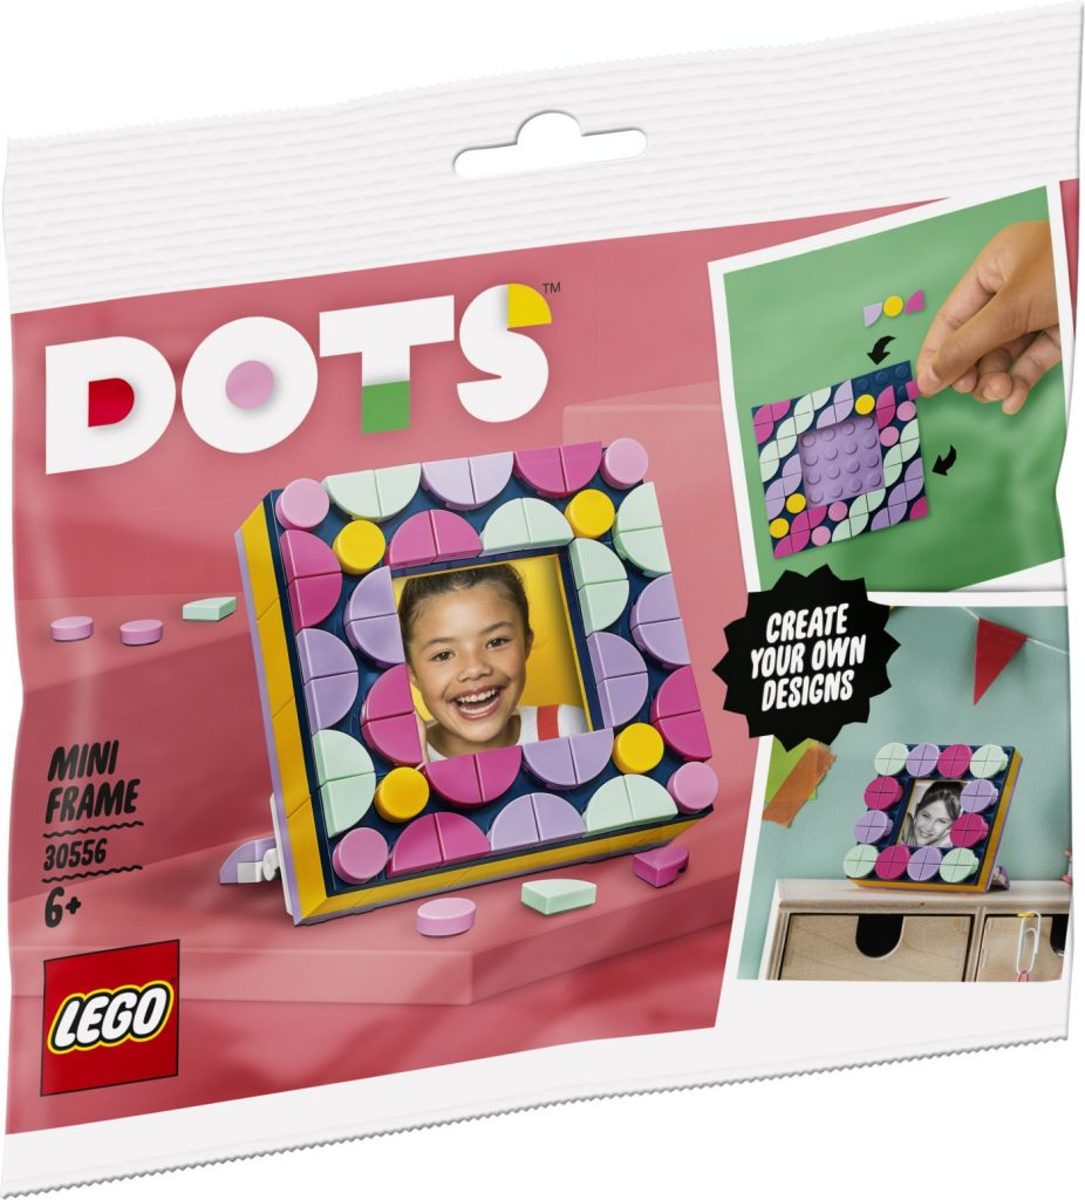 LEGO DOTS Mini Frame (Polybag) - 30556